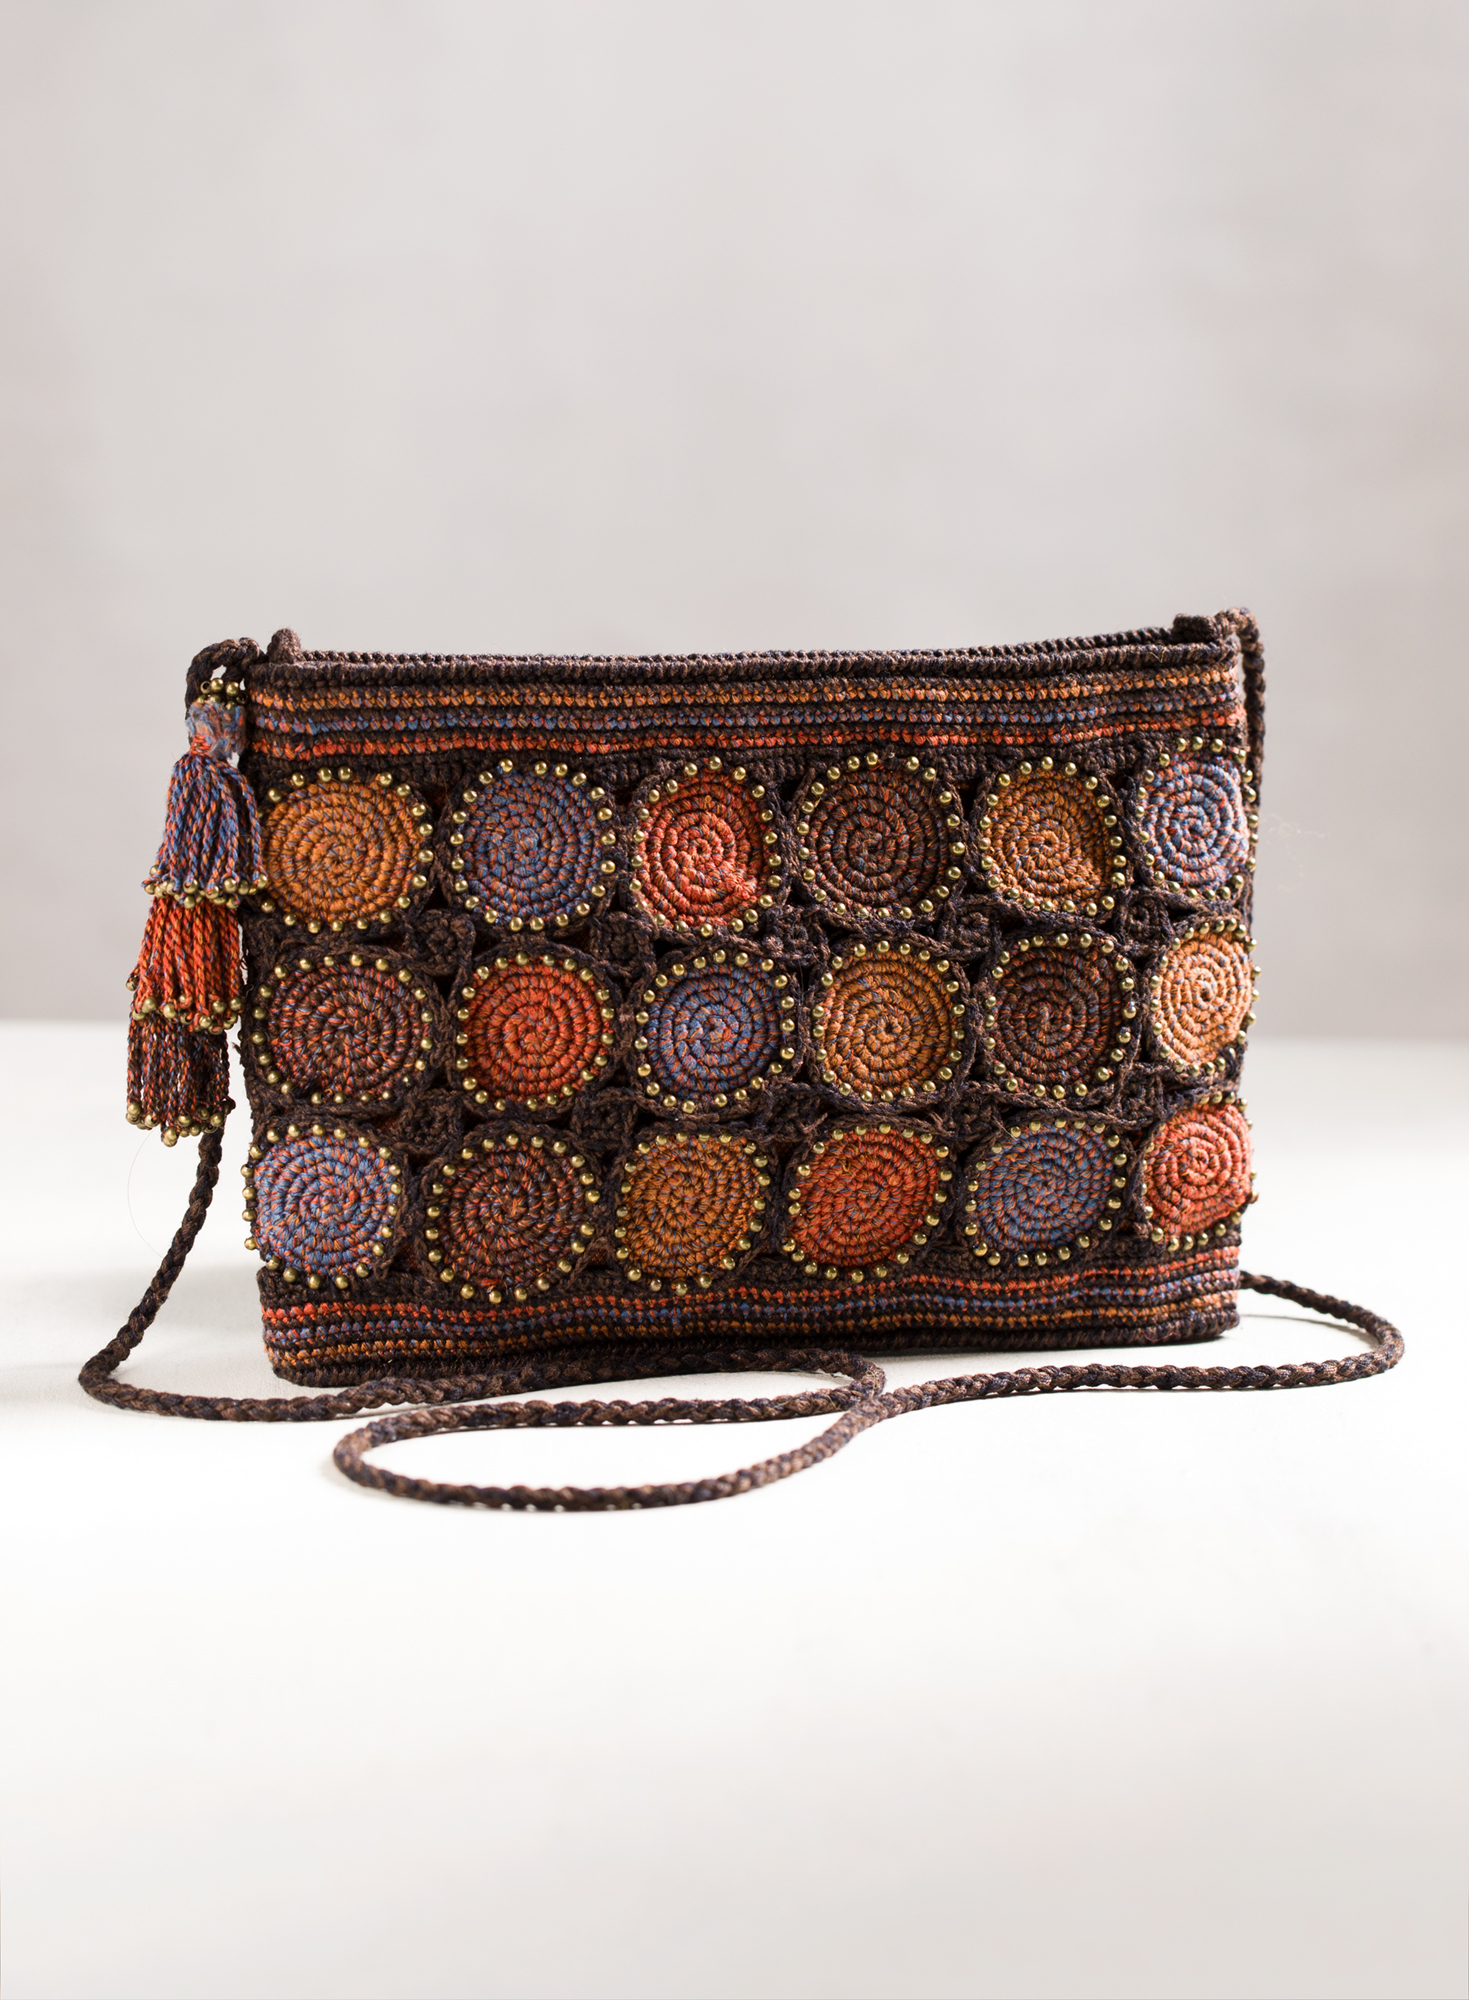 Valentines Gift Handmade Embroidered Ethnic Handbags